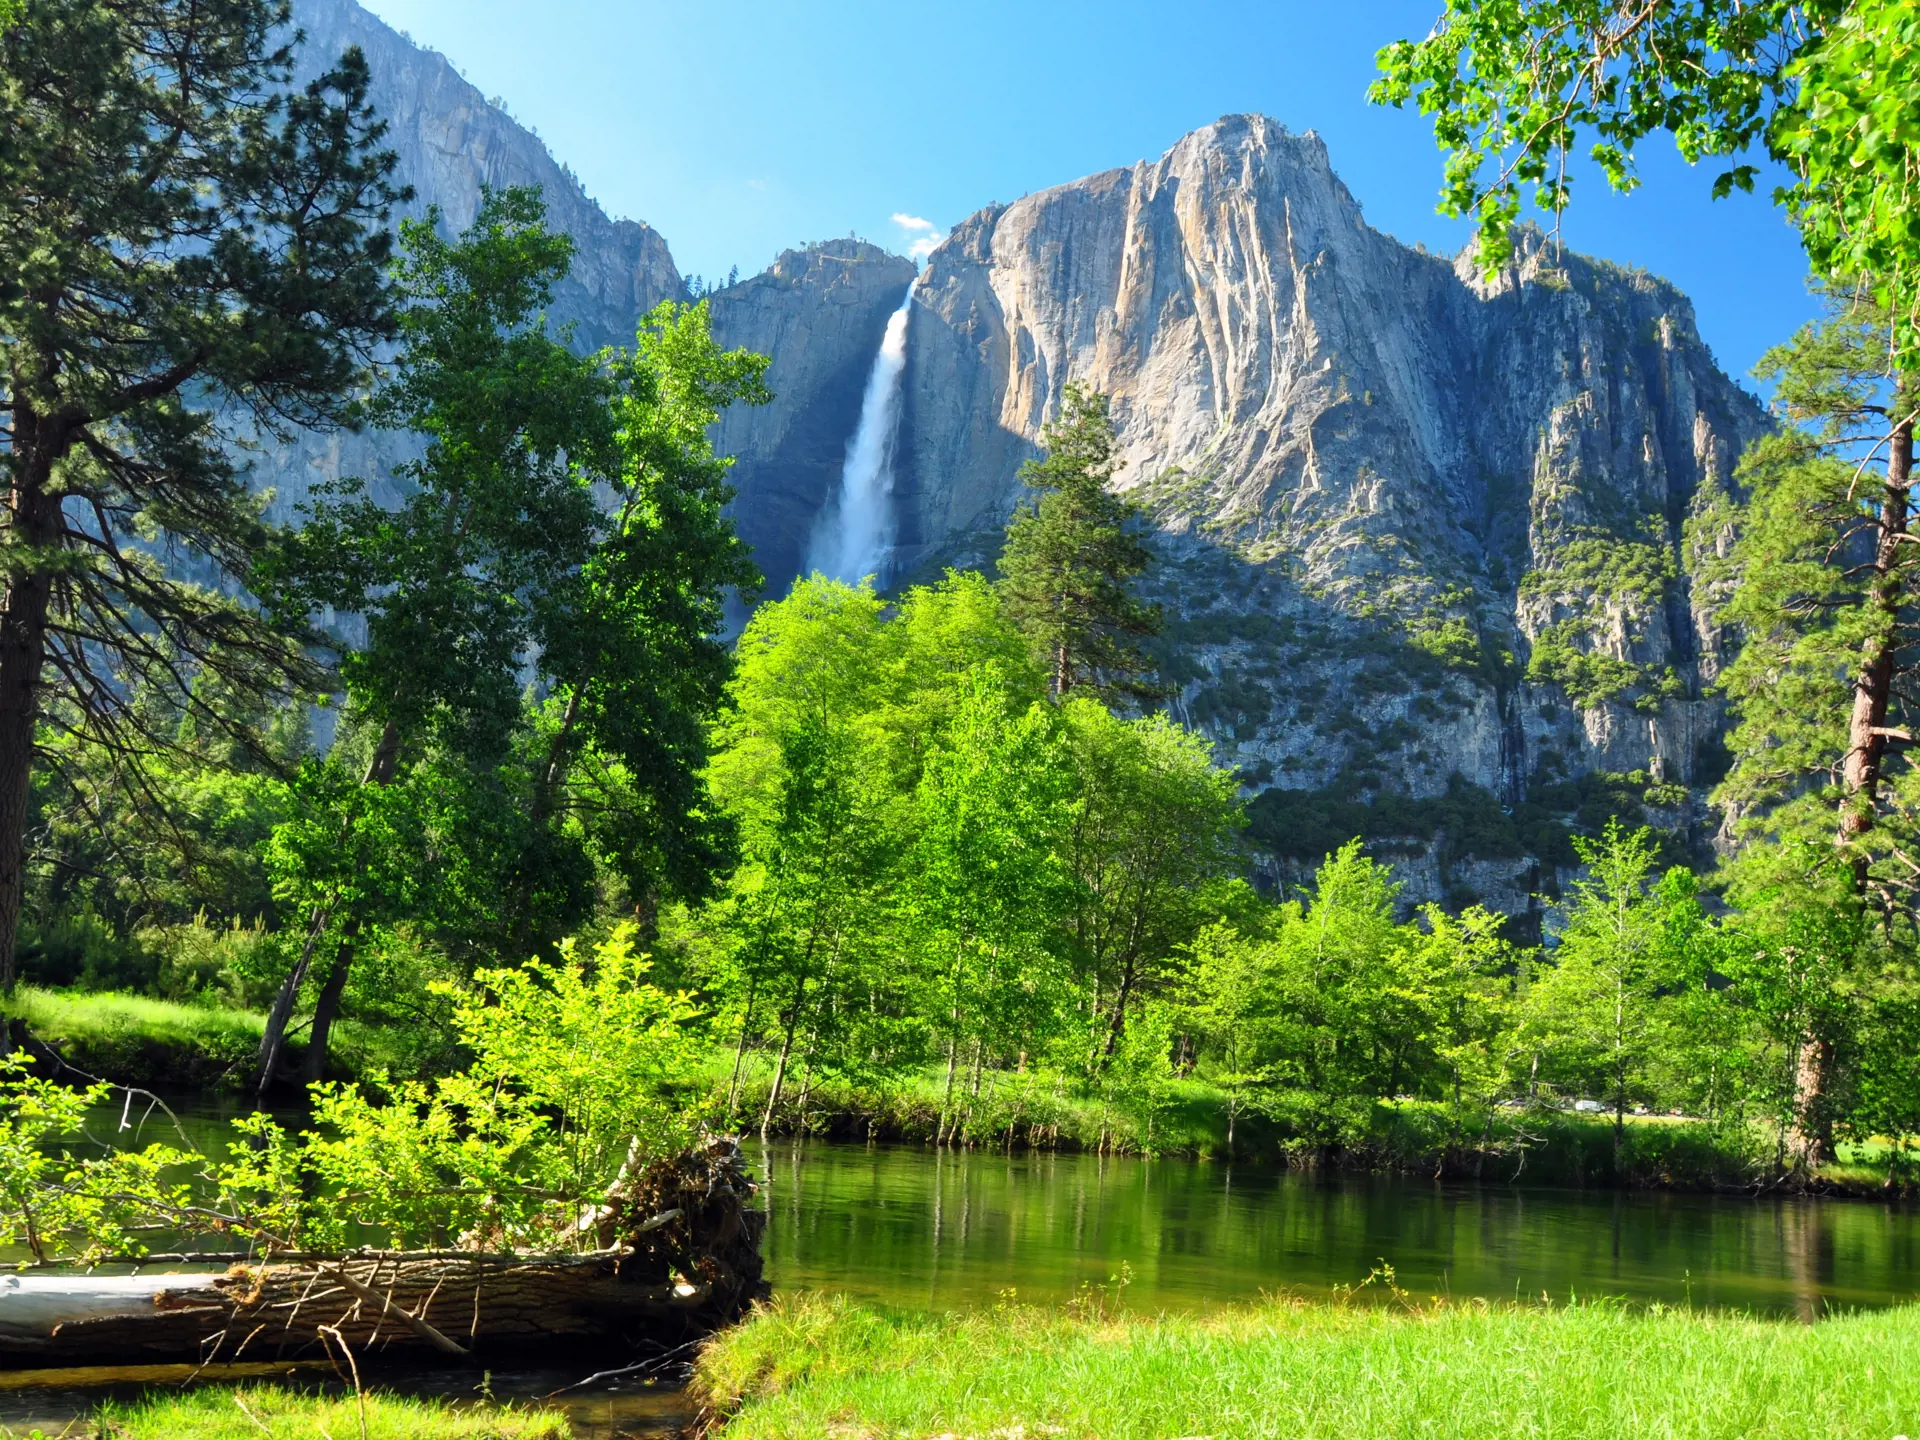 dag 7.2 USA_Upper Yosemite Falls Yosemite National Park California_56441893.jpg